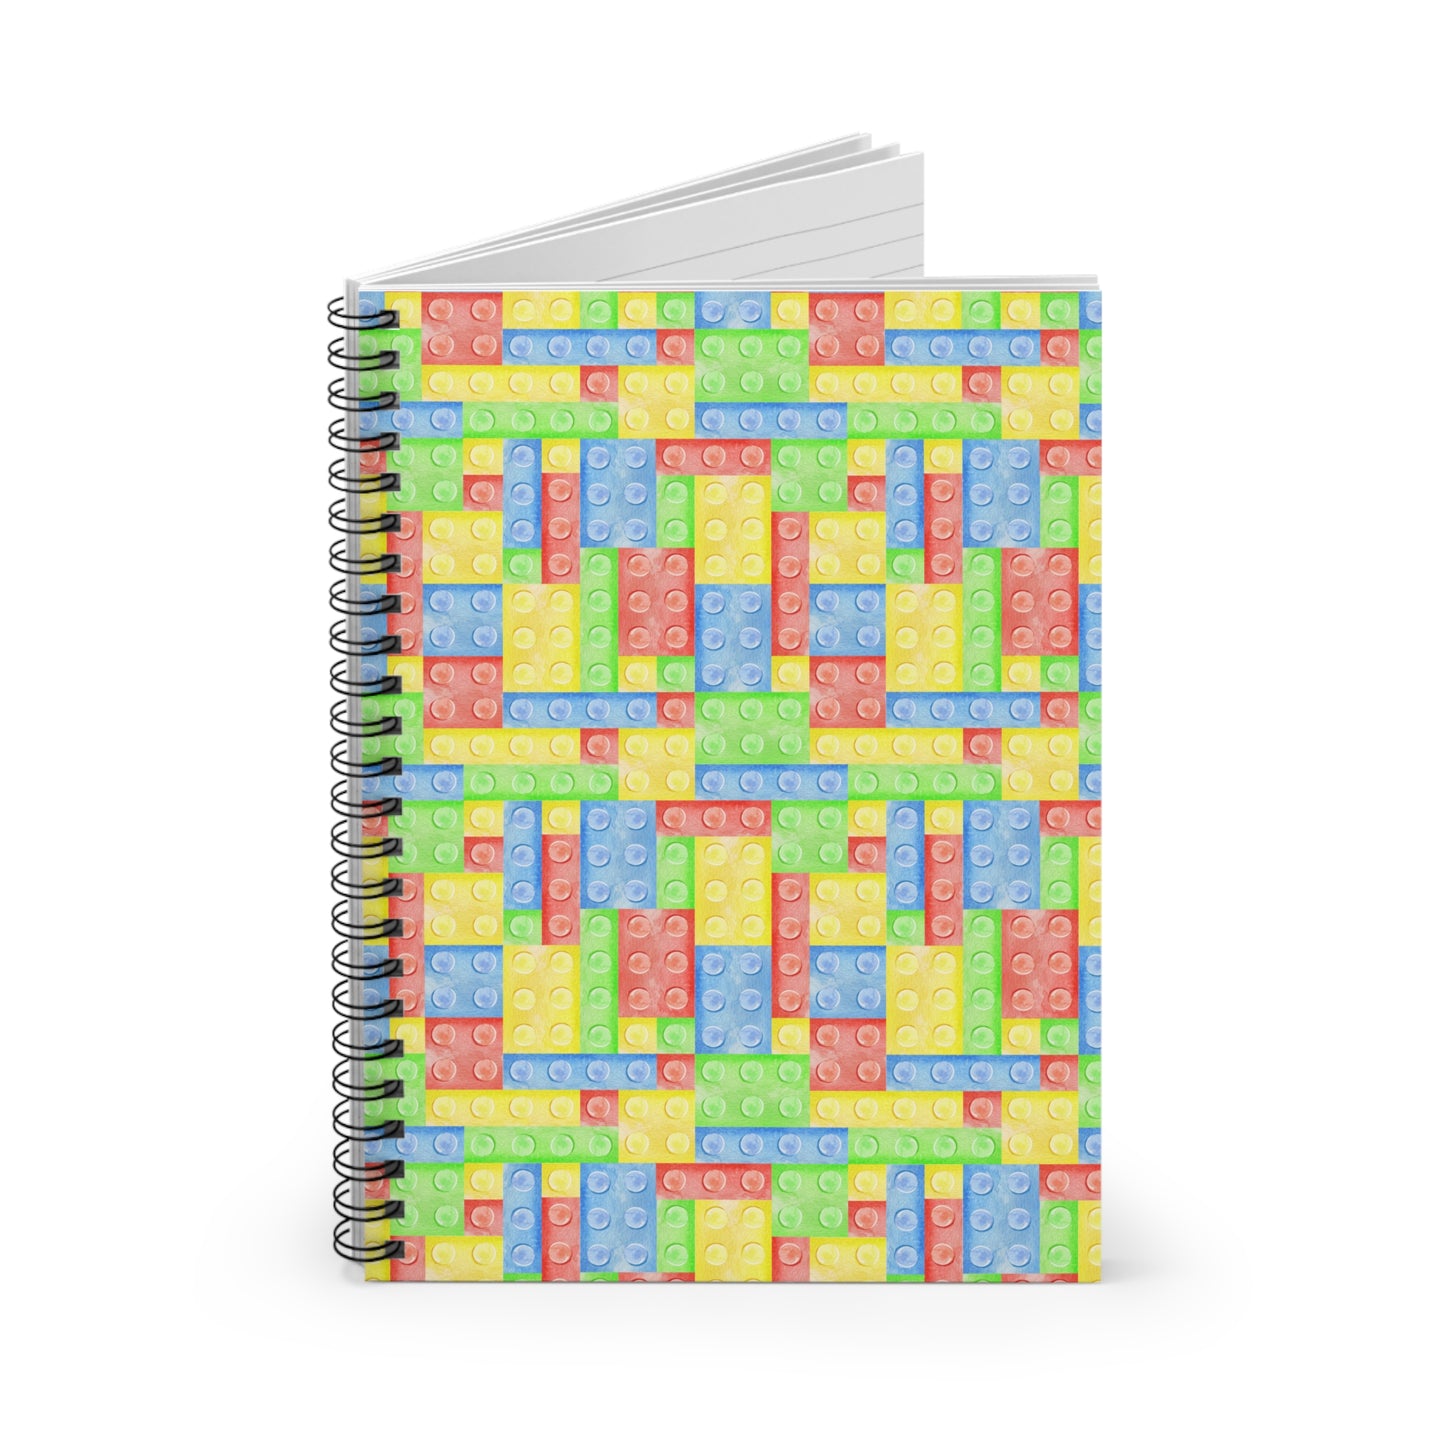 Building Bricks, Spiral Notebook - Ruled Line